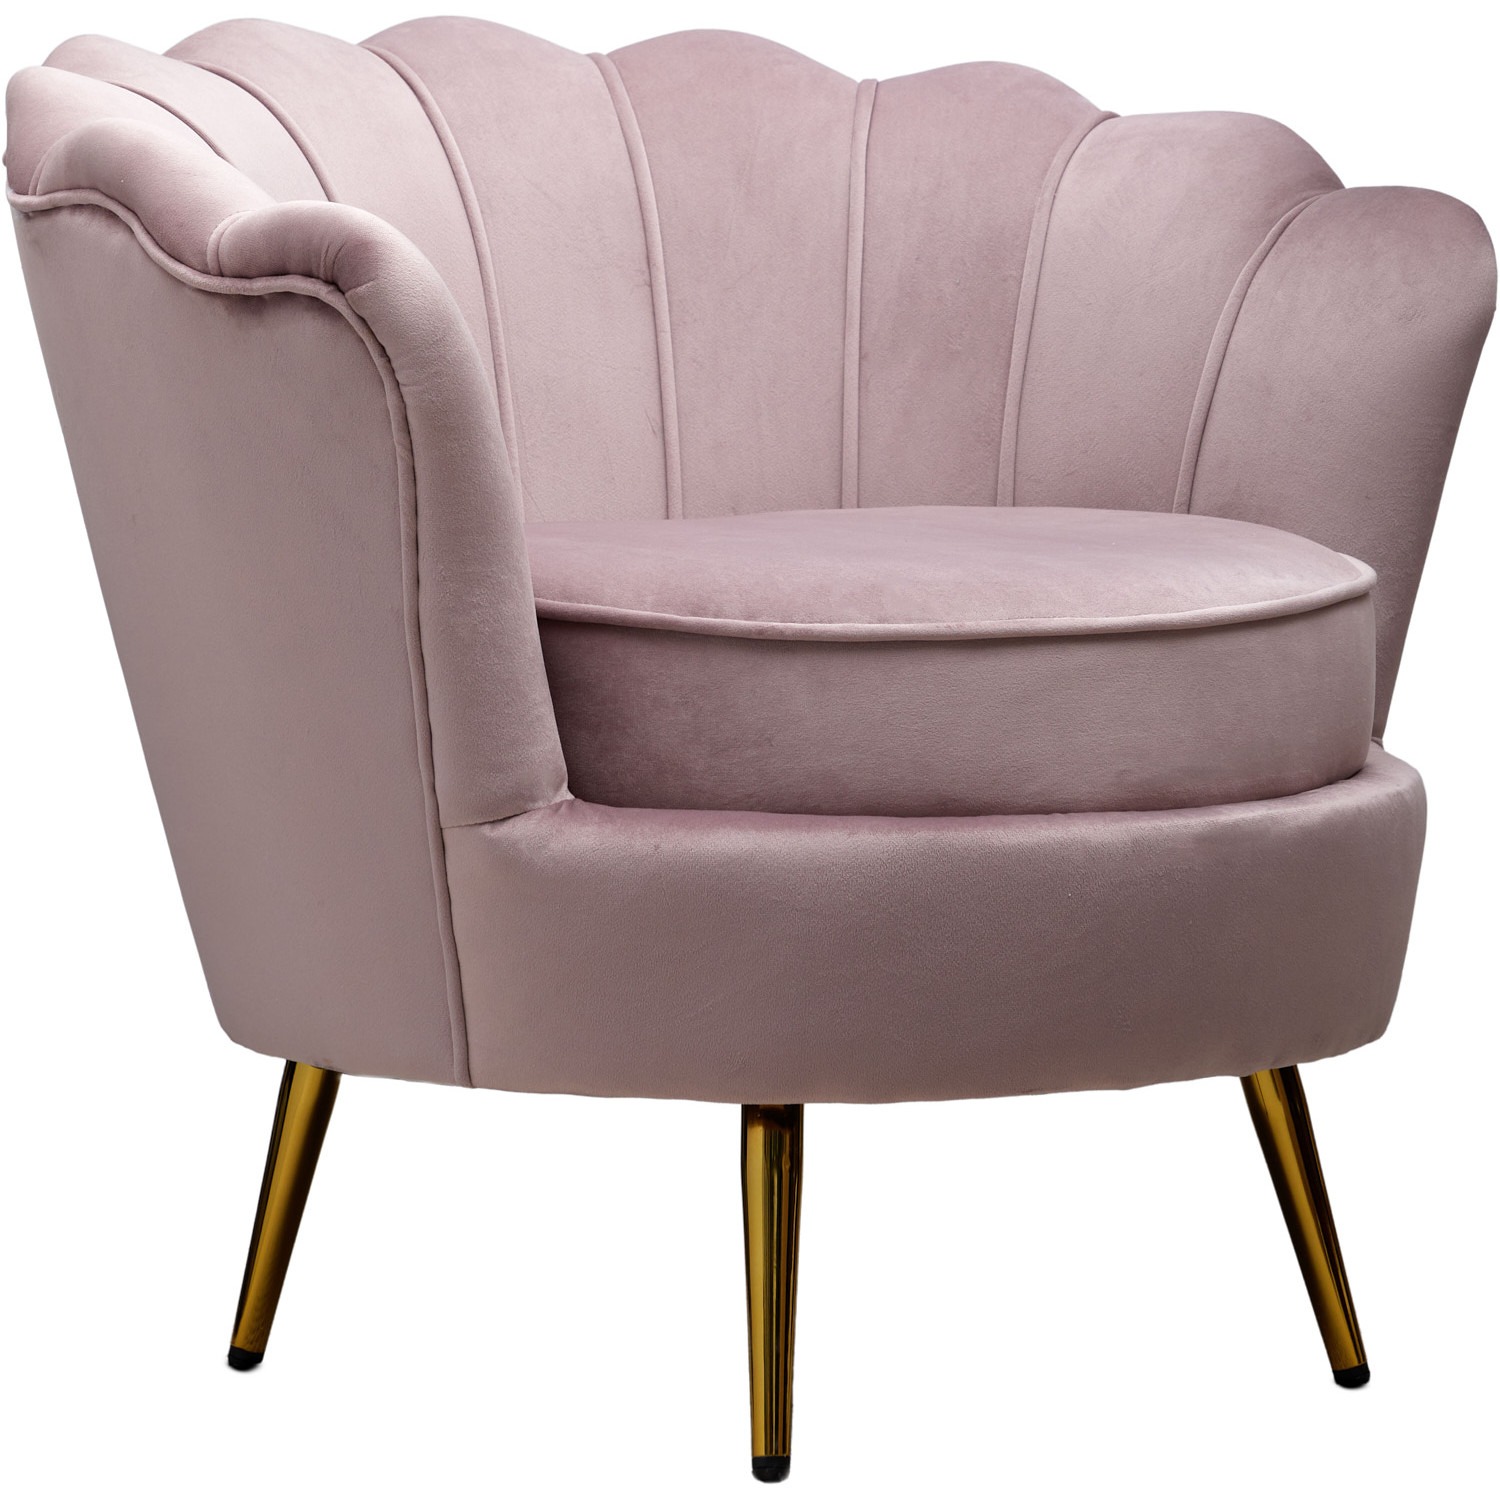 Кресло Glasar Флоренция розовое 78х77х65 см, цвет золотистый